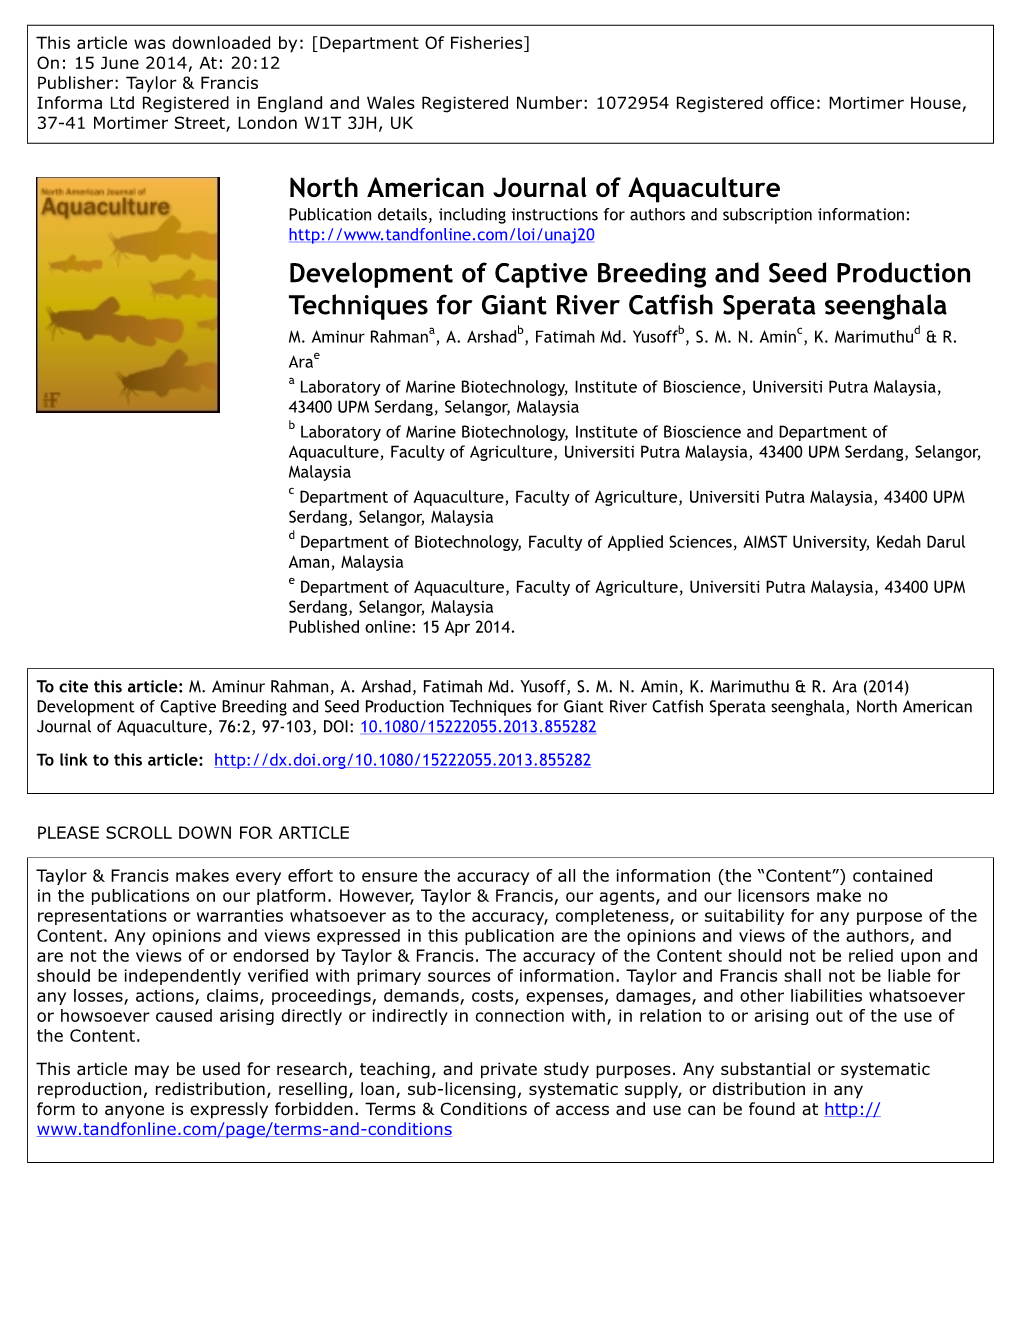 North American Journal of Aquaculture Development Of